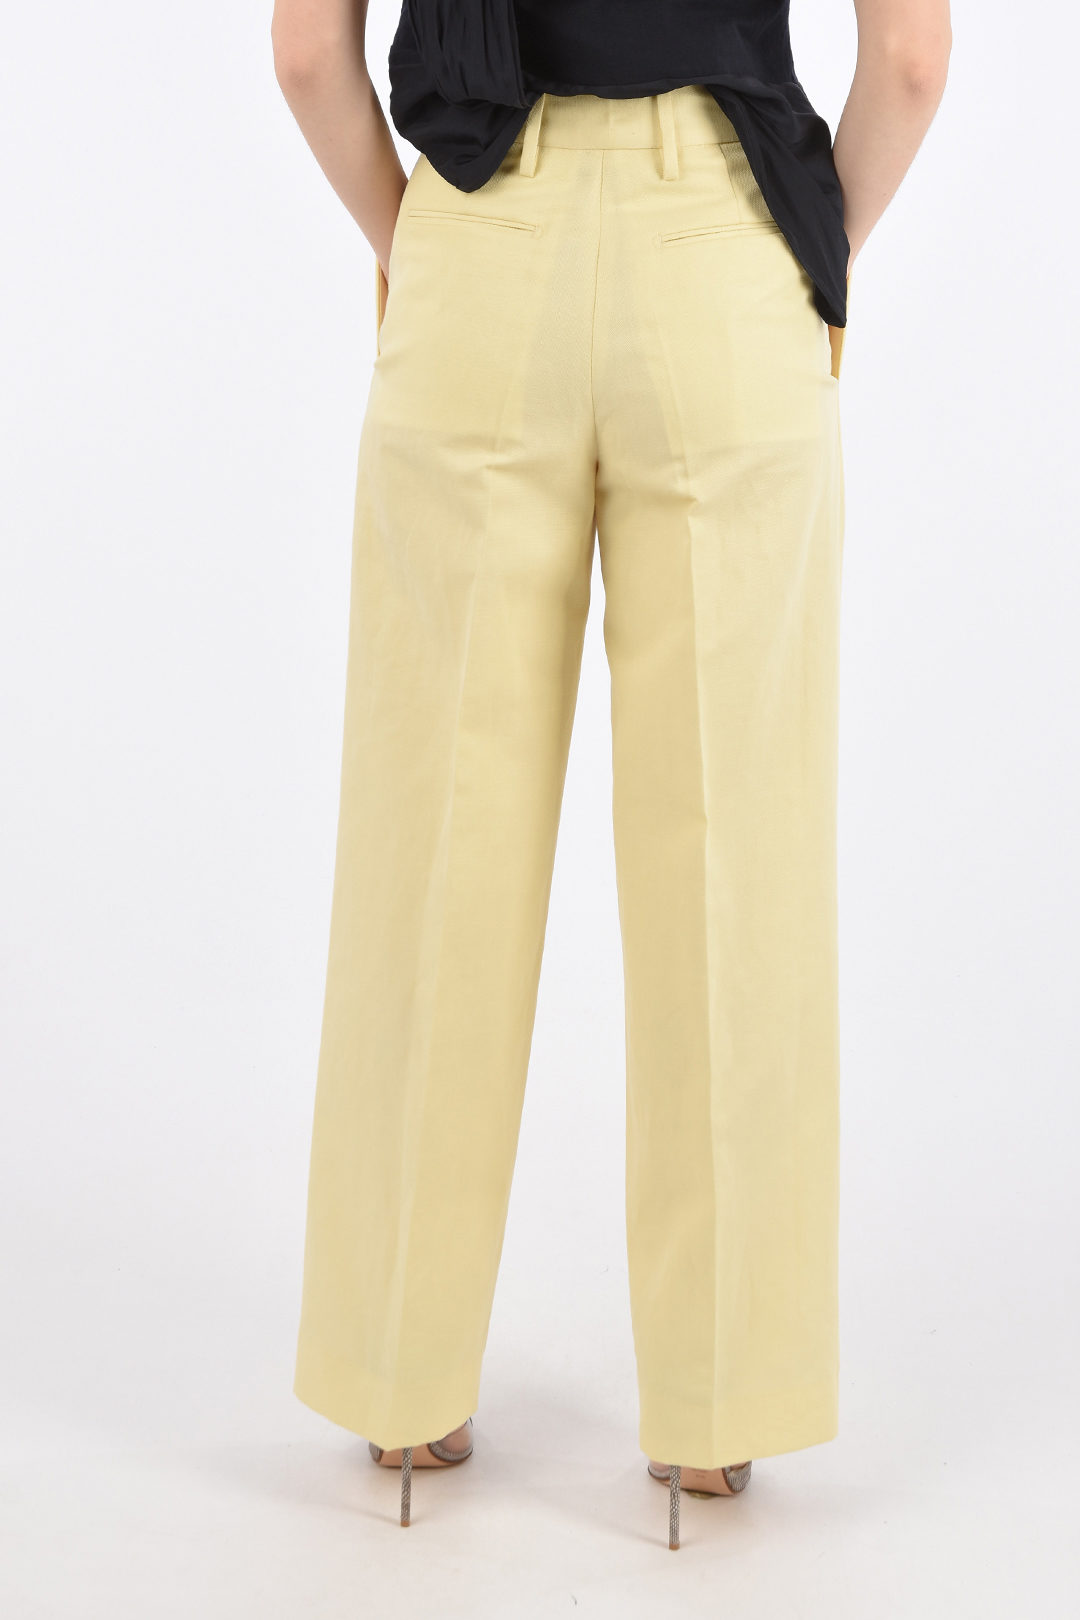 Boho Style High Waist Black Cotton Pants for Women | BohoClandestino  Wholesale